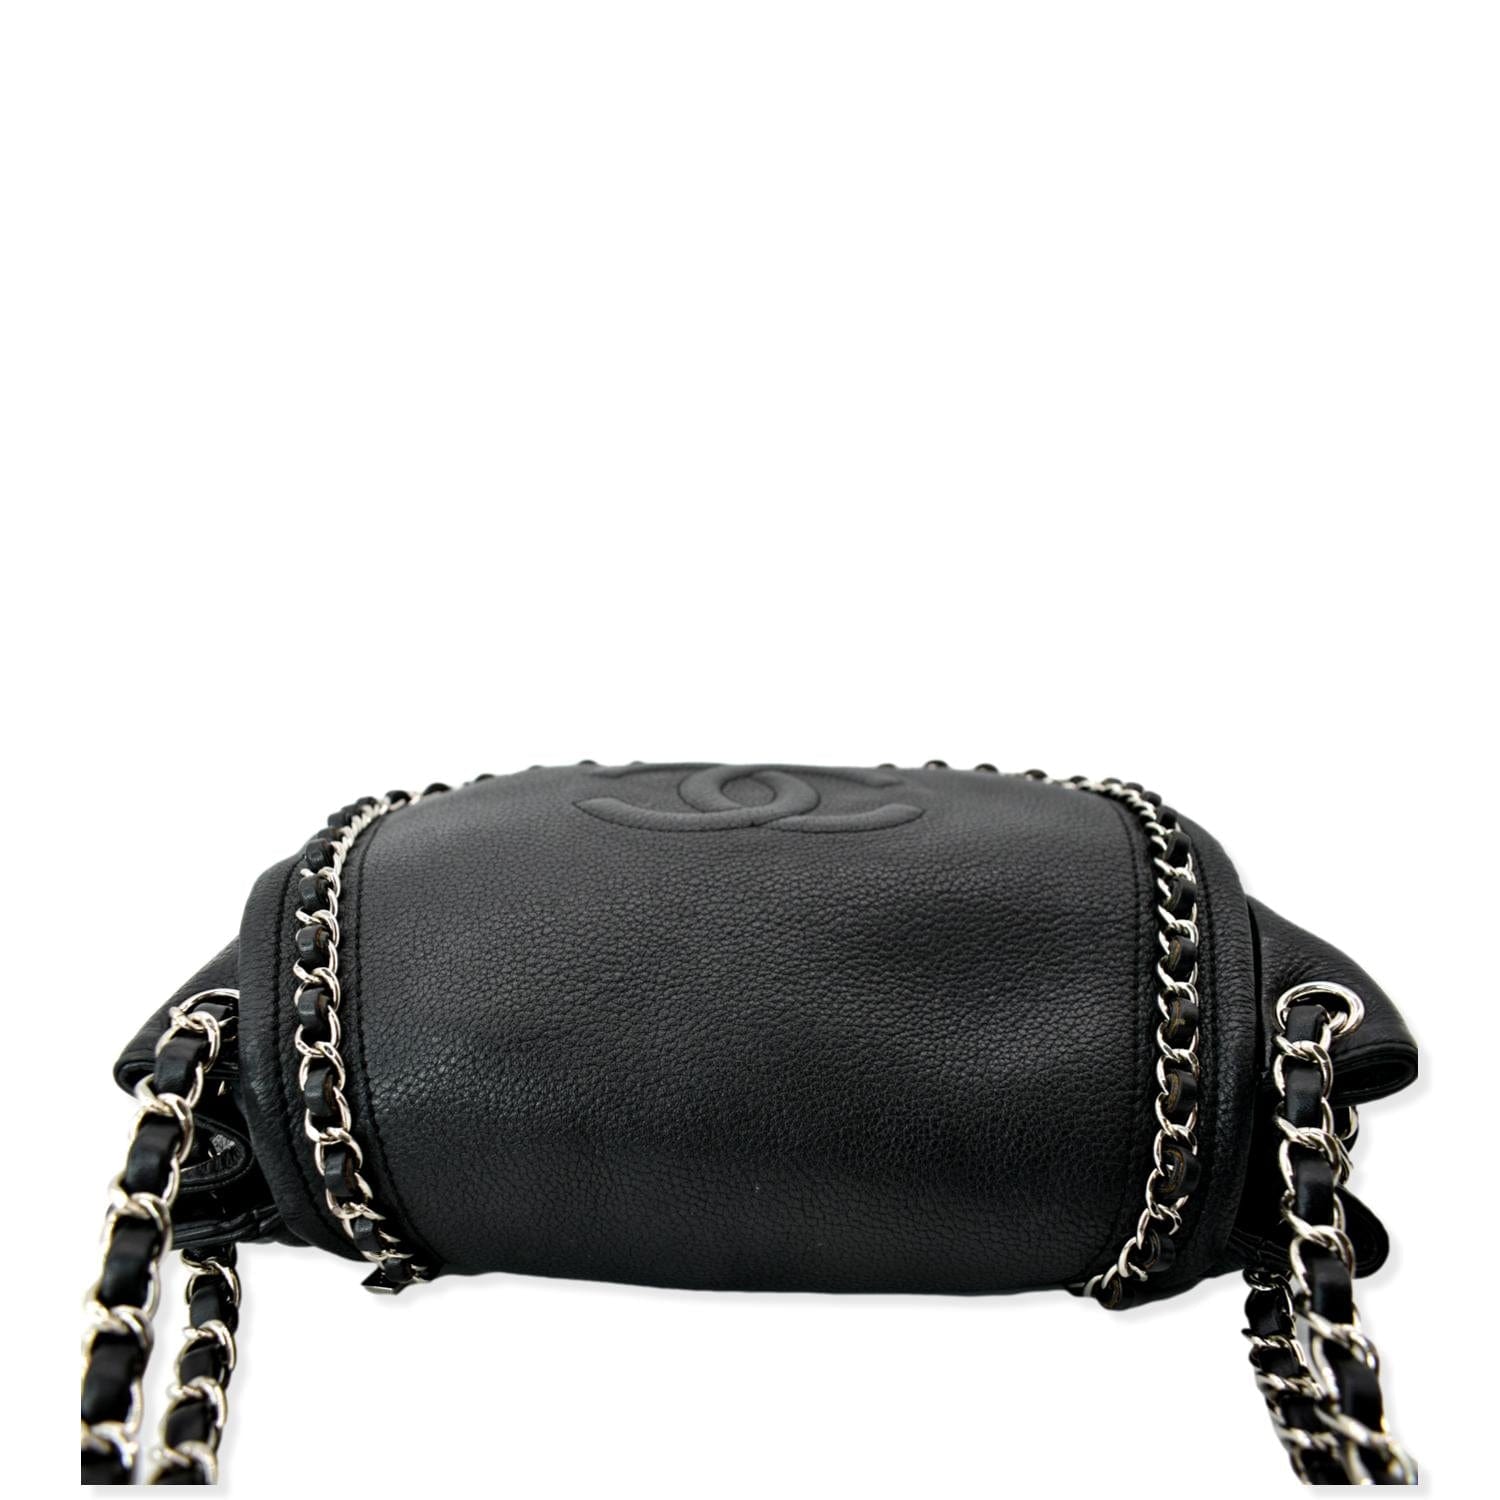 Handbags Chanel Chanel Half Moon Chain Shoulder Bag Crossbody Black Quilted Flap